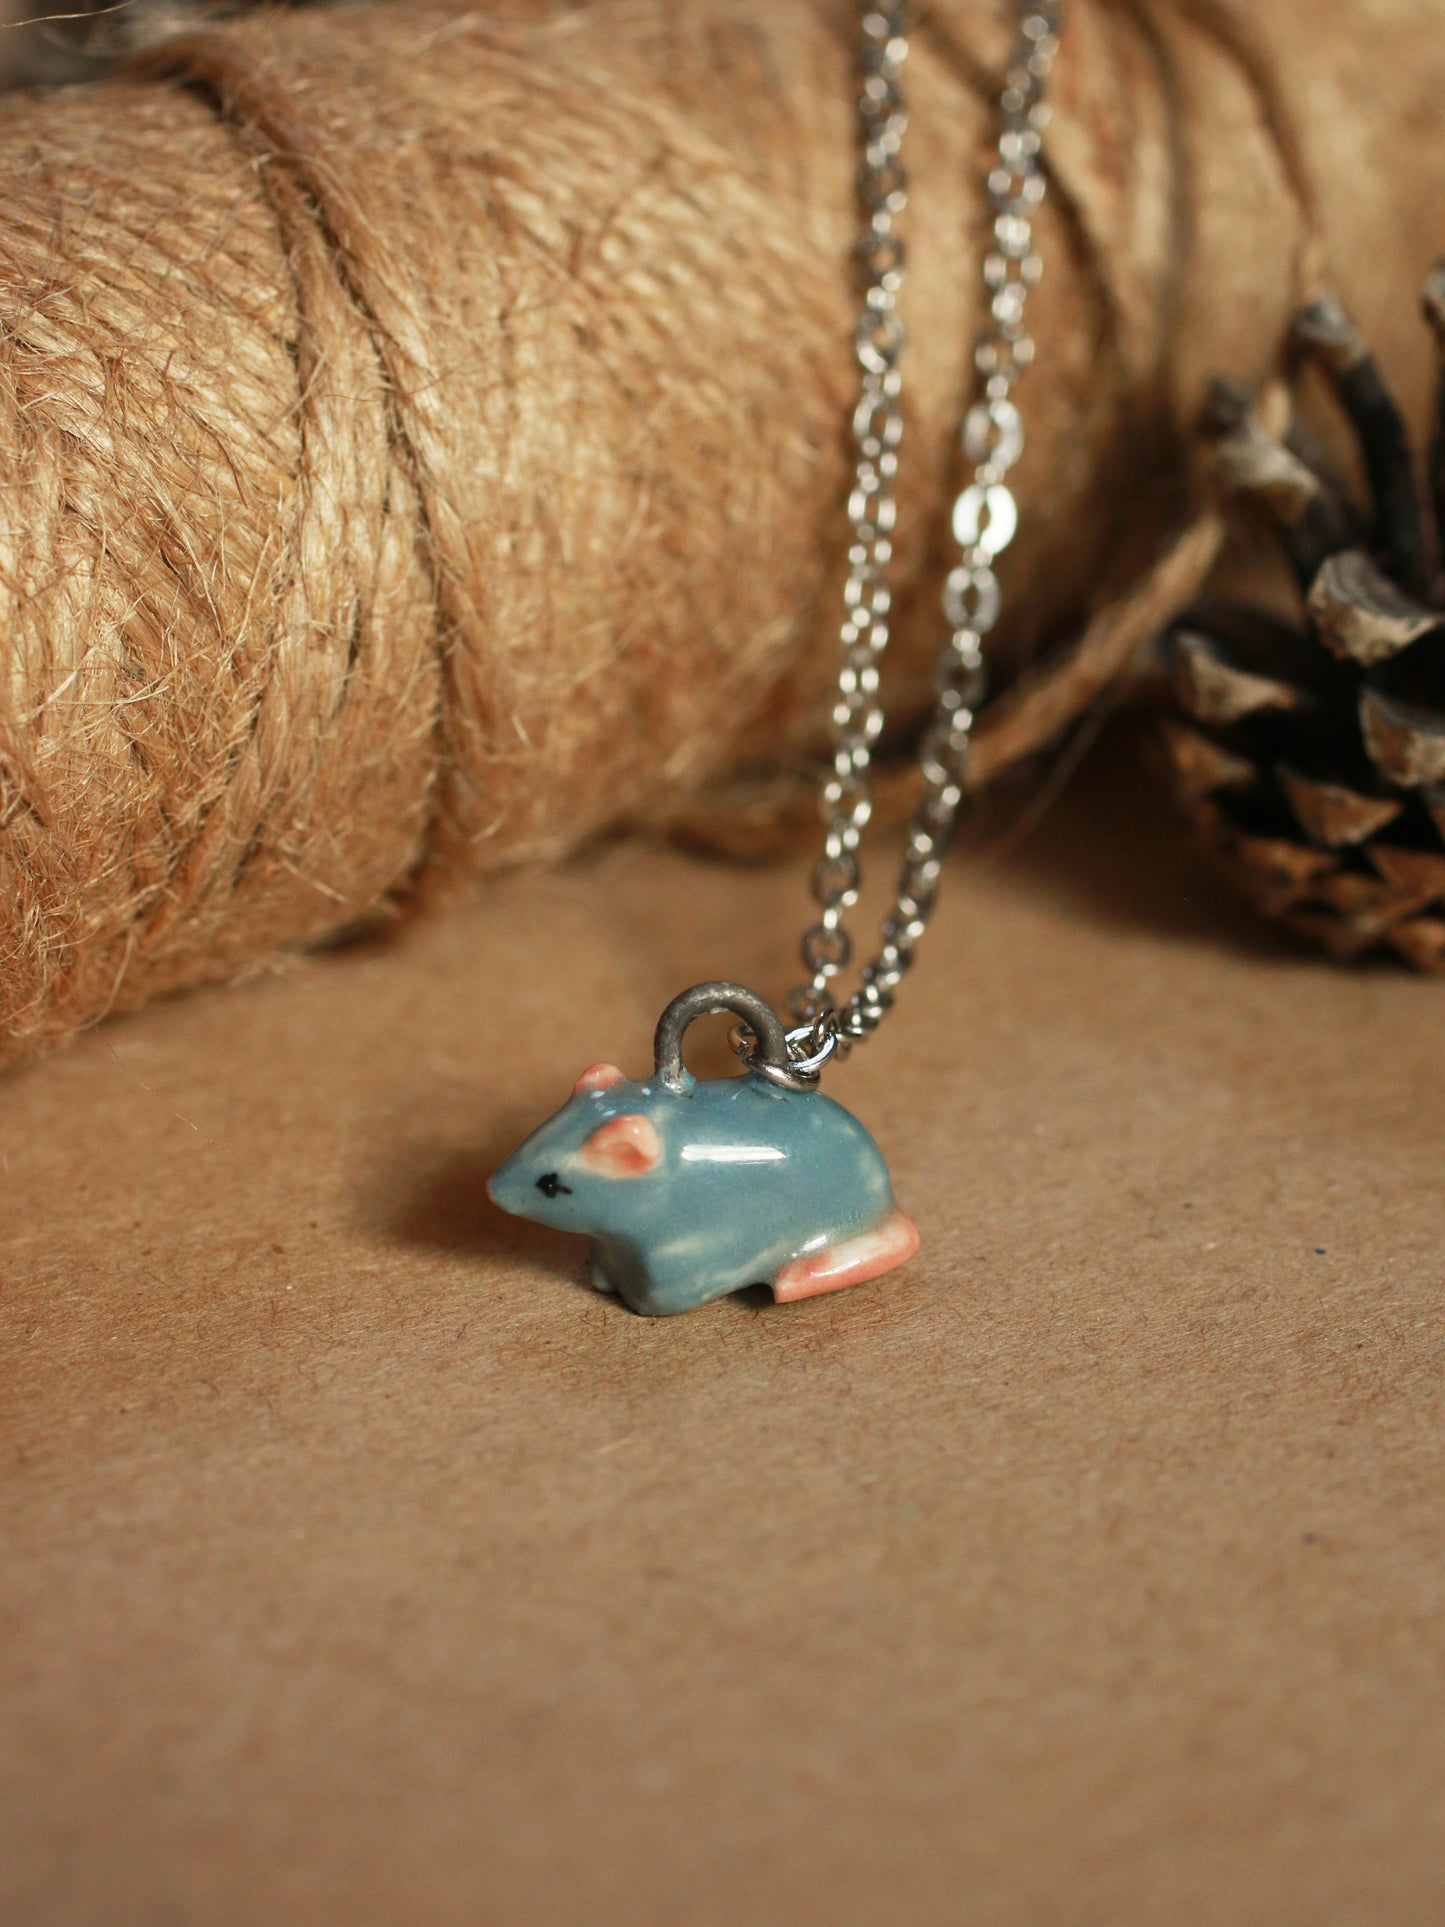 Mouse necklace - Ceramic pendant